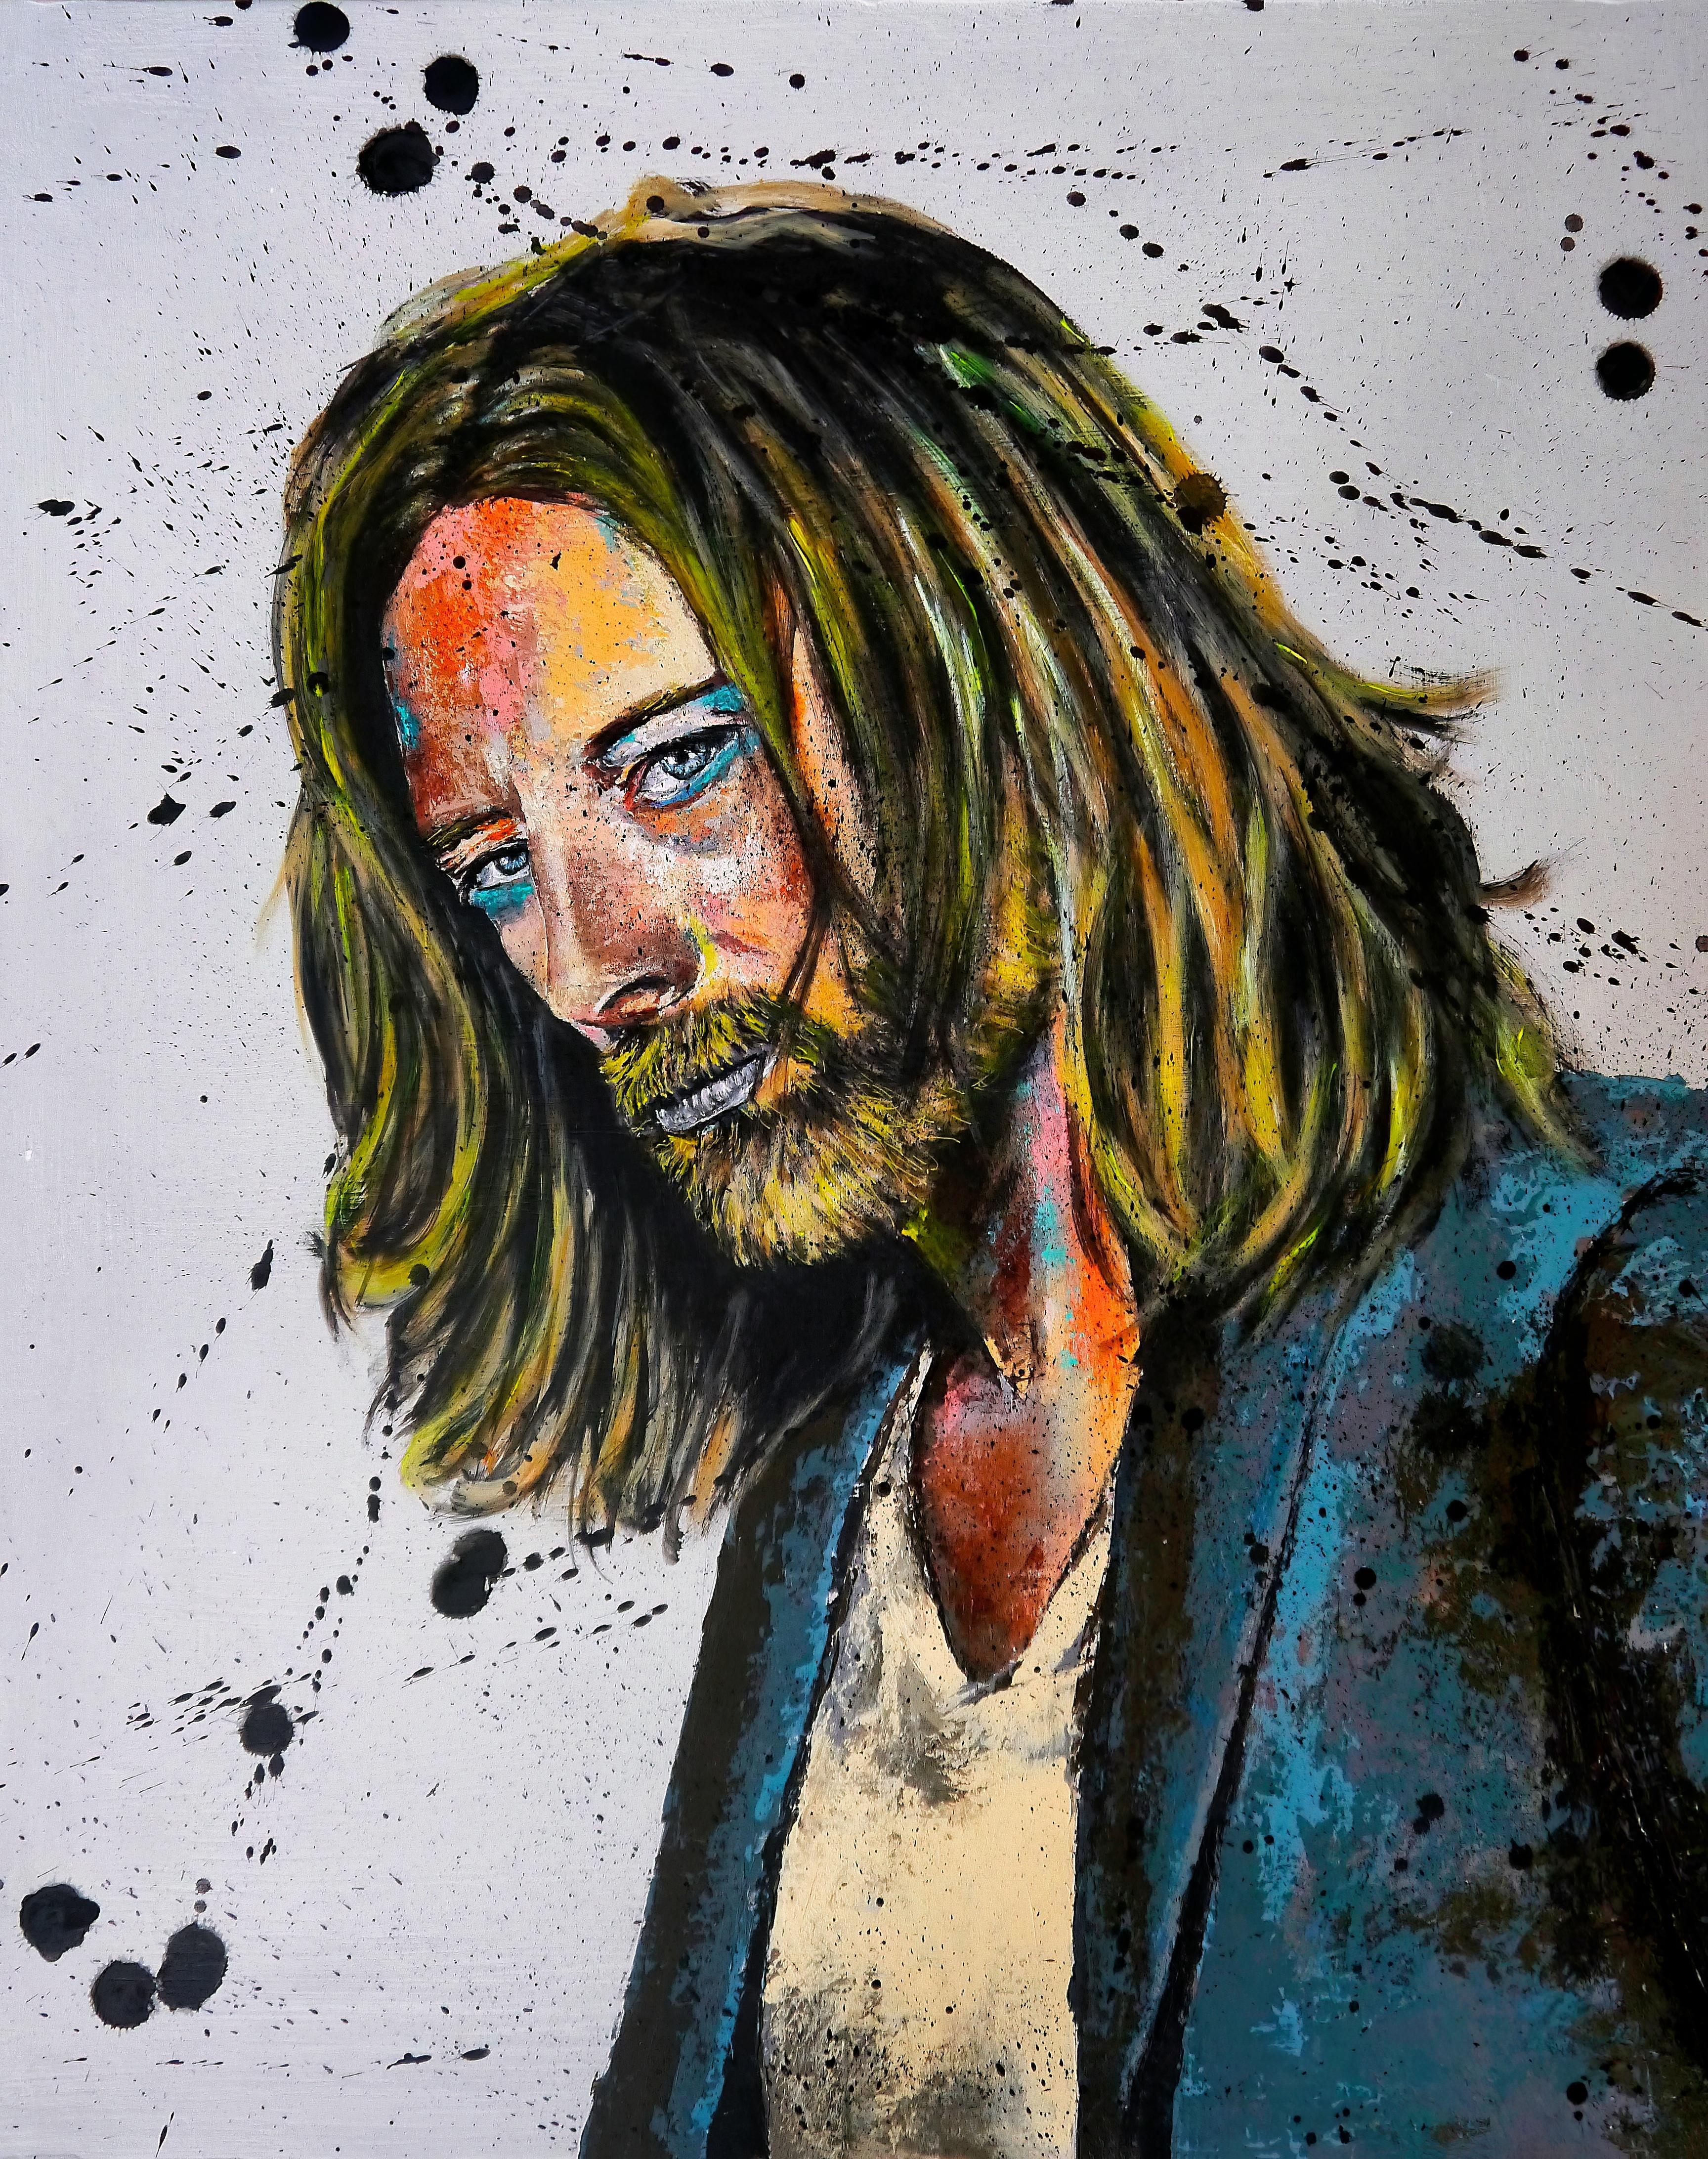 French School - Portrait Thom Yorke - Radiohead - Oil Impressionist